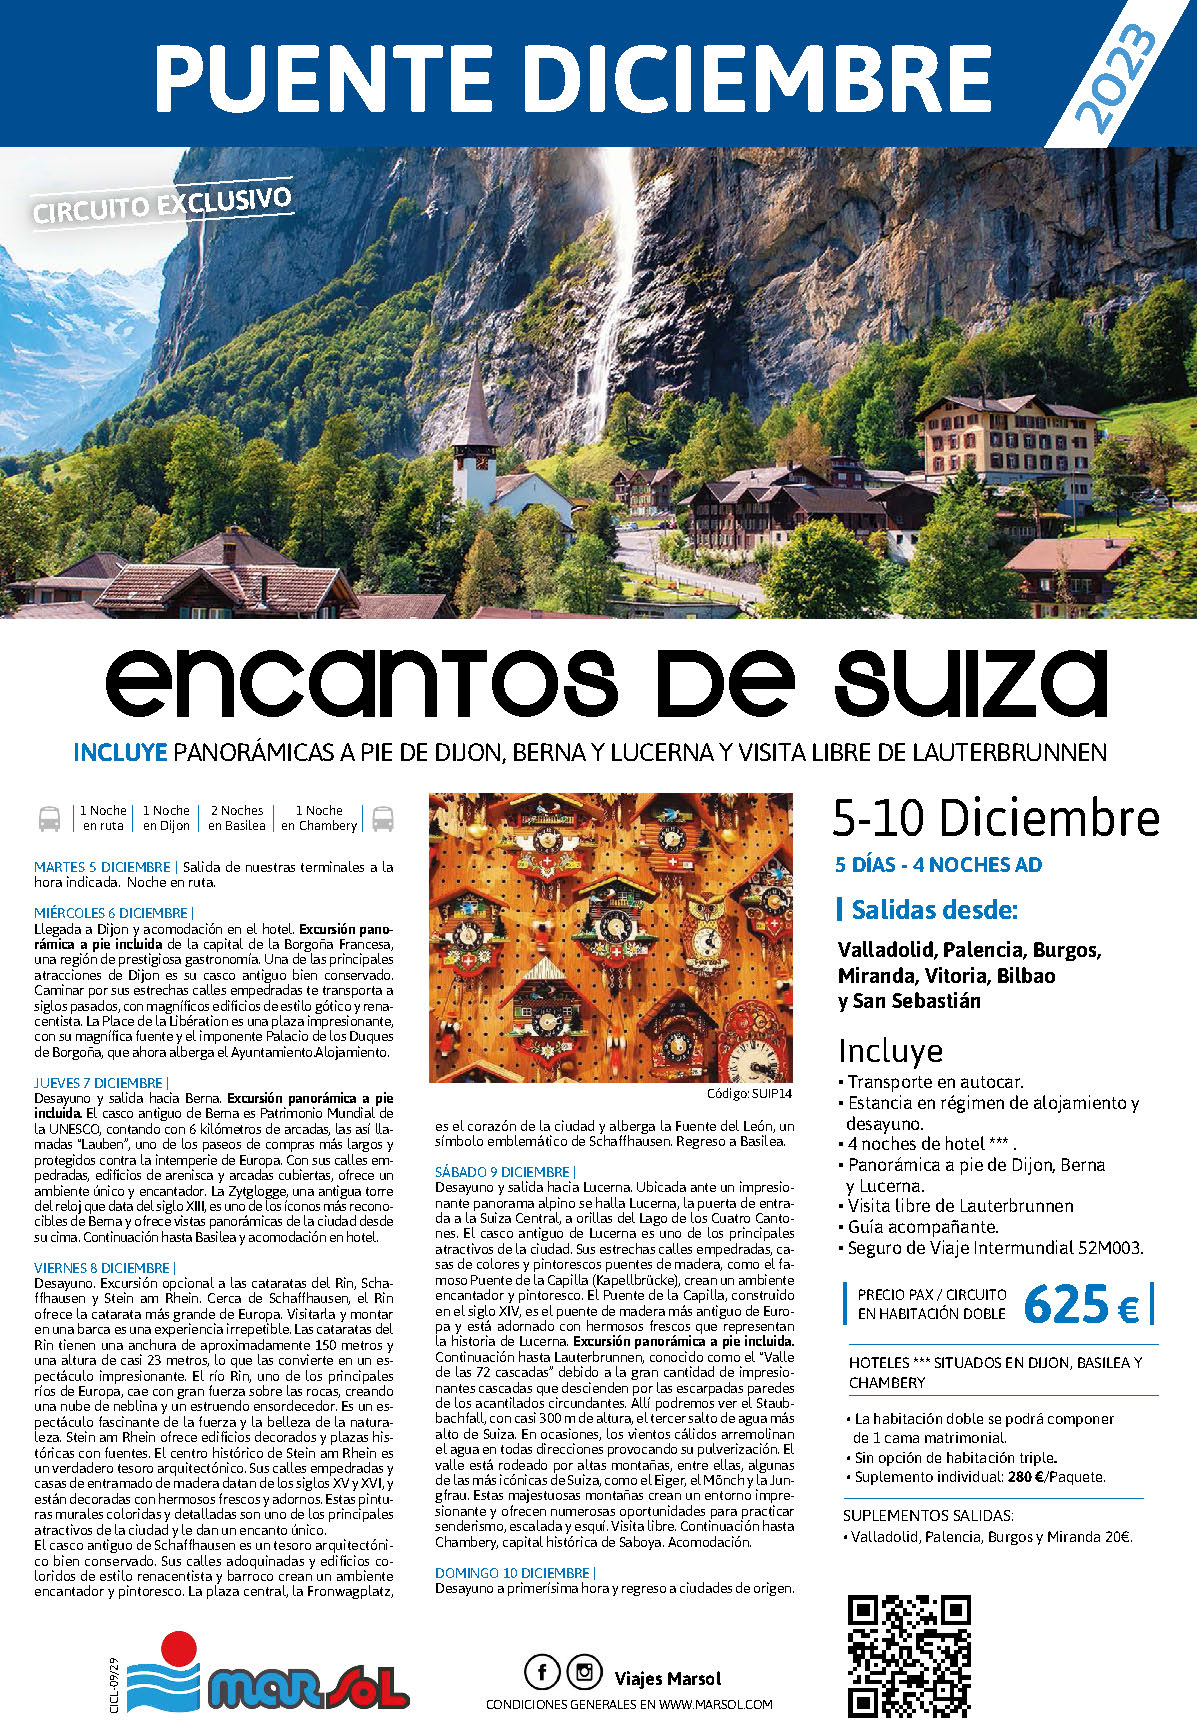 Oferta Marsol Puente de Diciembre 2023 circuito Encantos de Suiza 5 dias salida 5 diciembre en autocar desde Norte de España